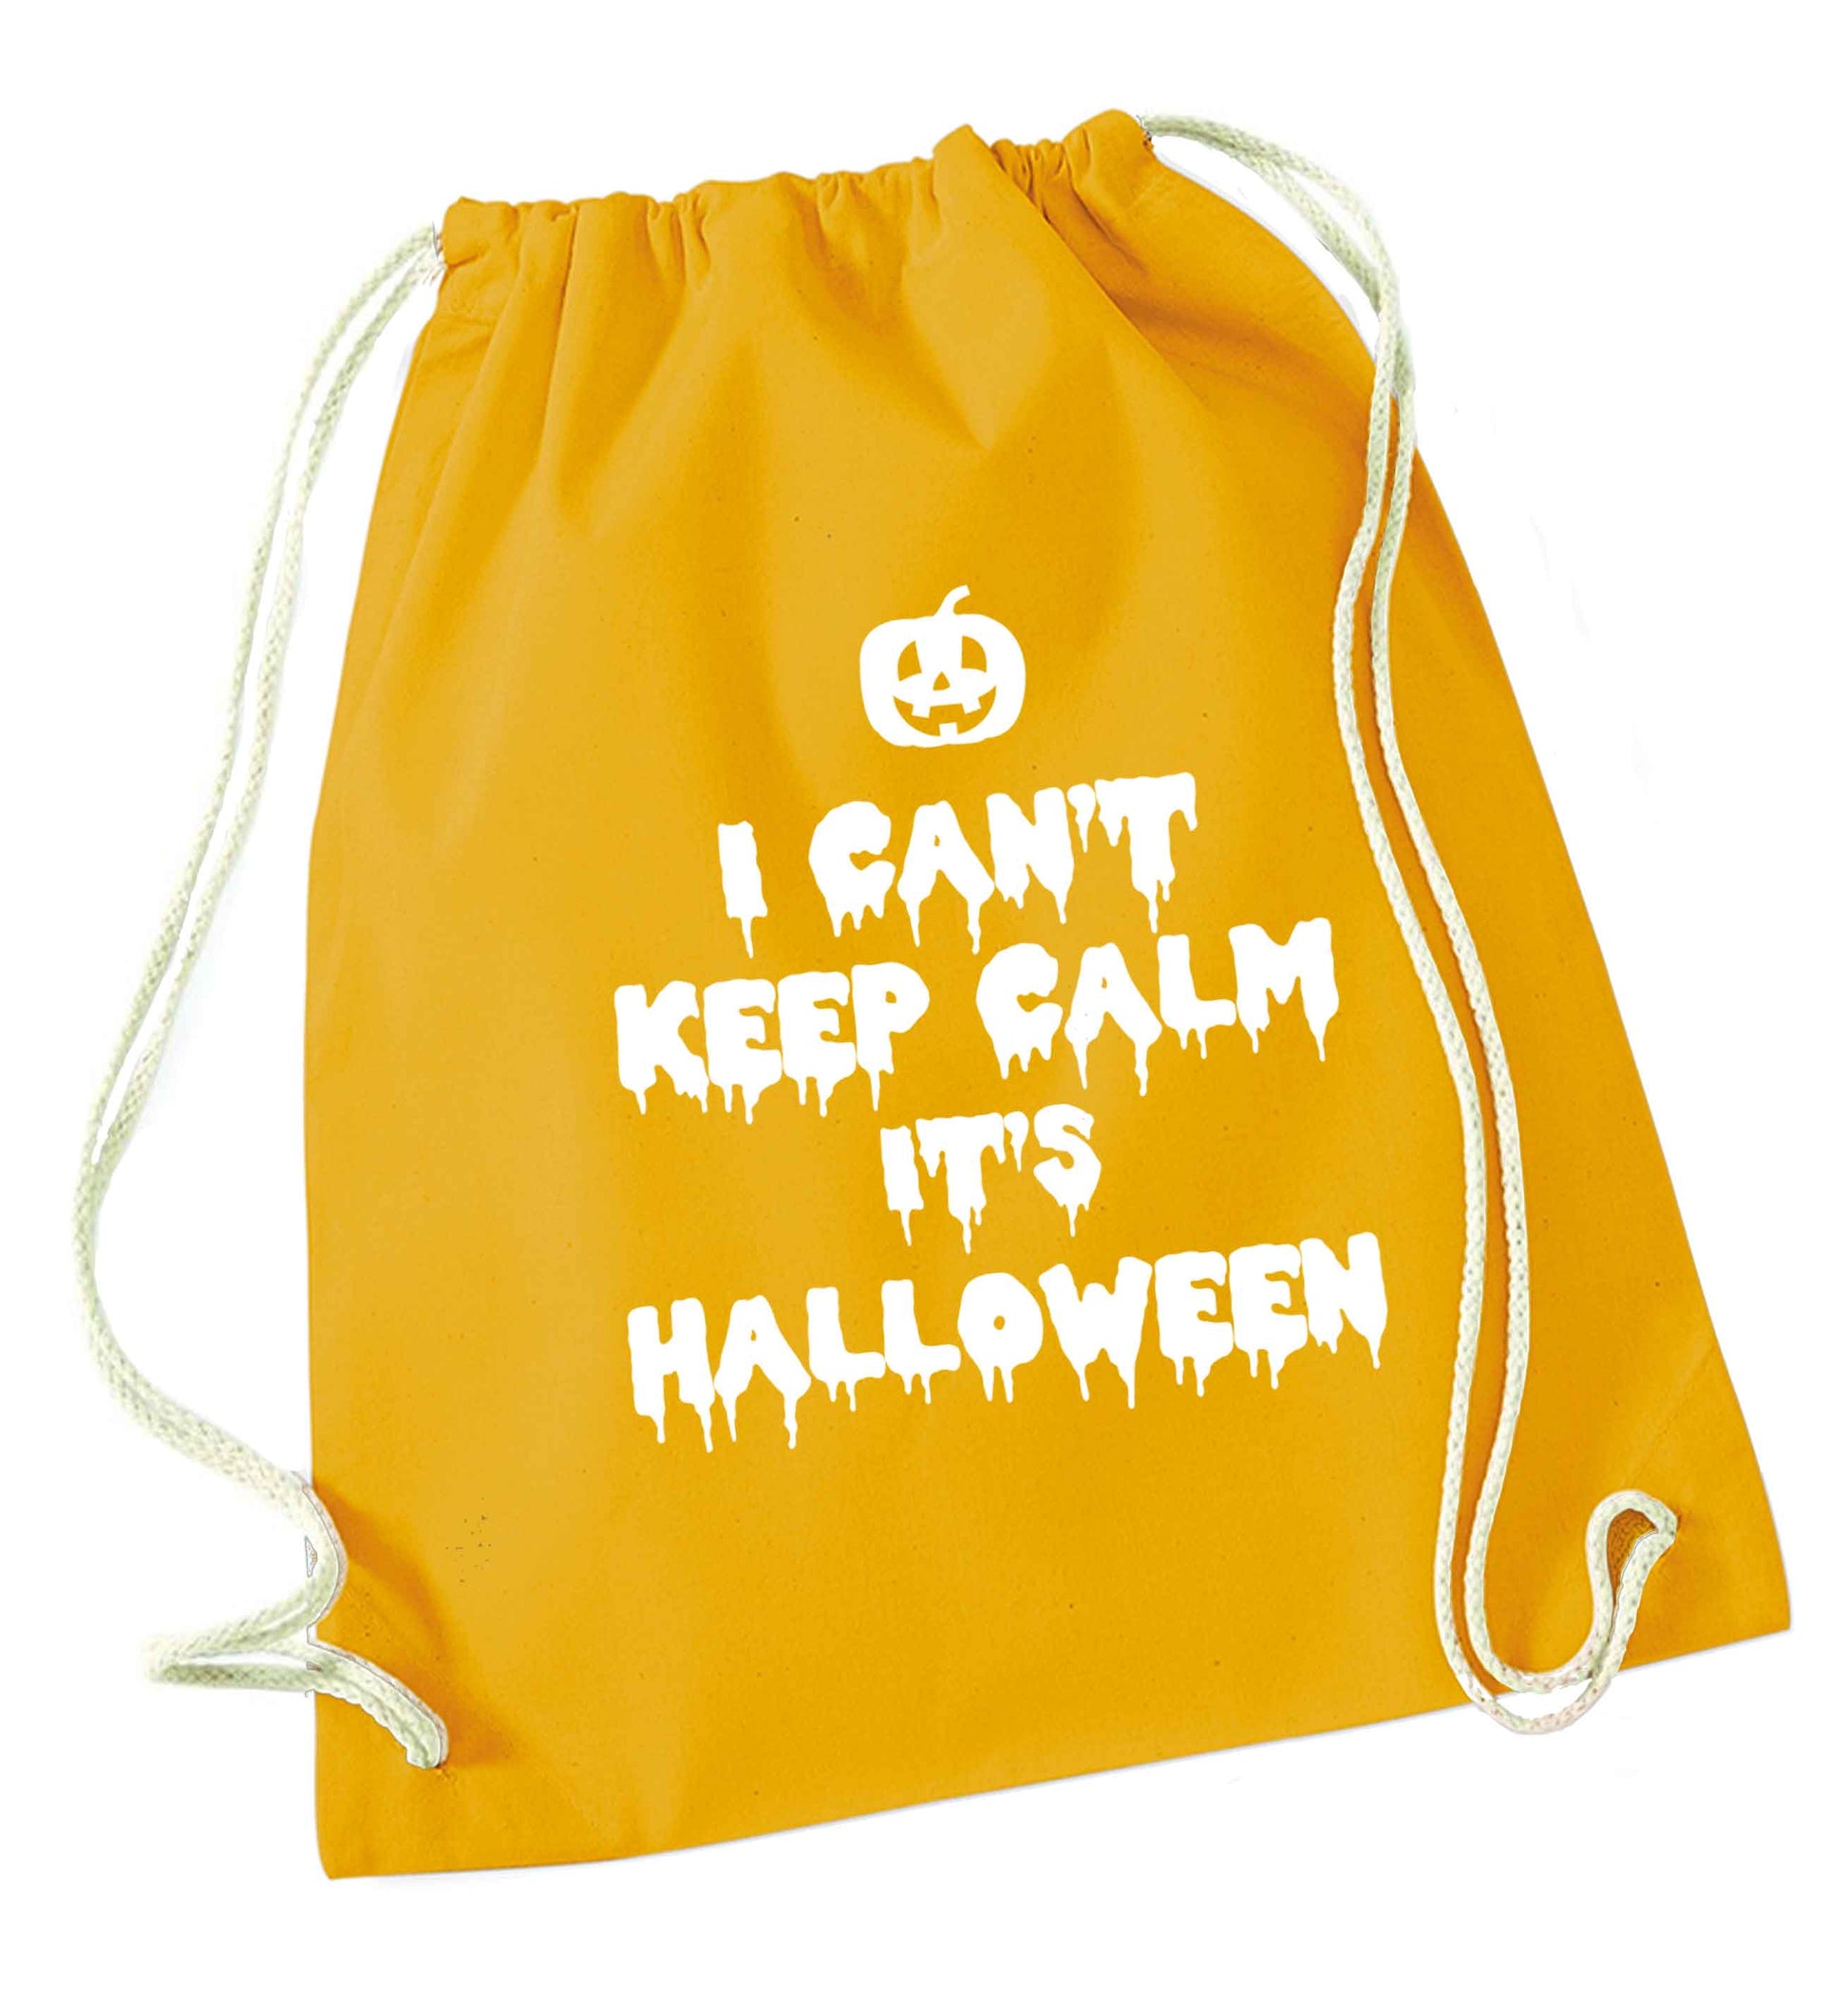 I can't keep calm it's halloween mustard drawstring bag